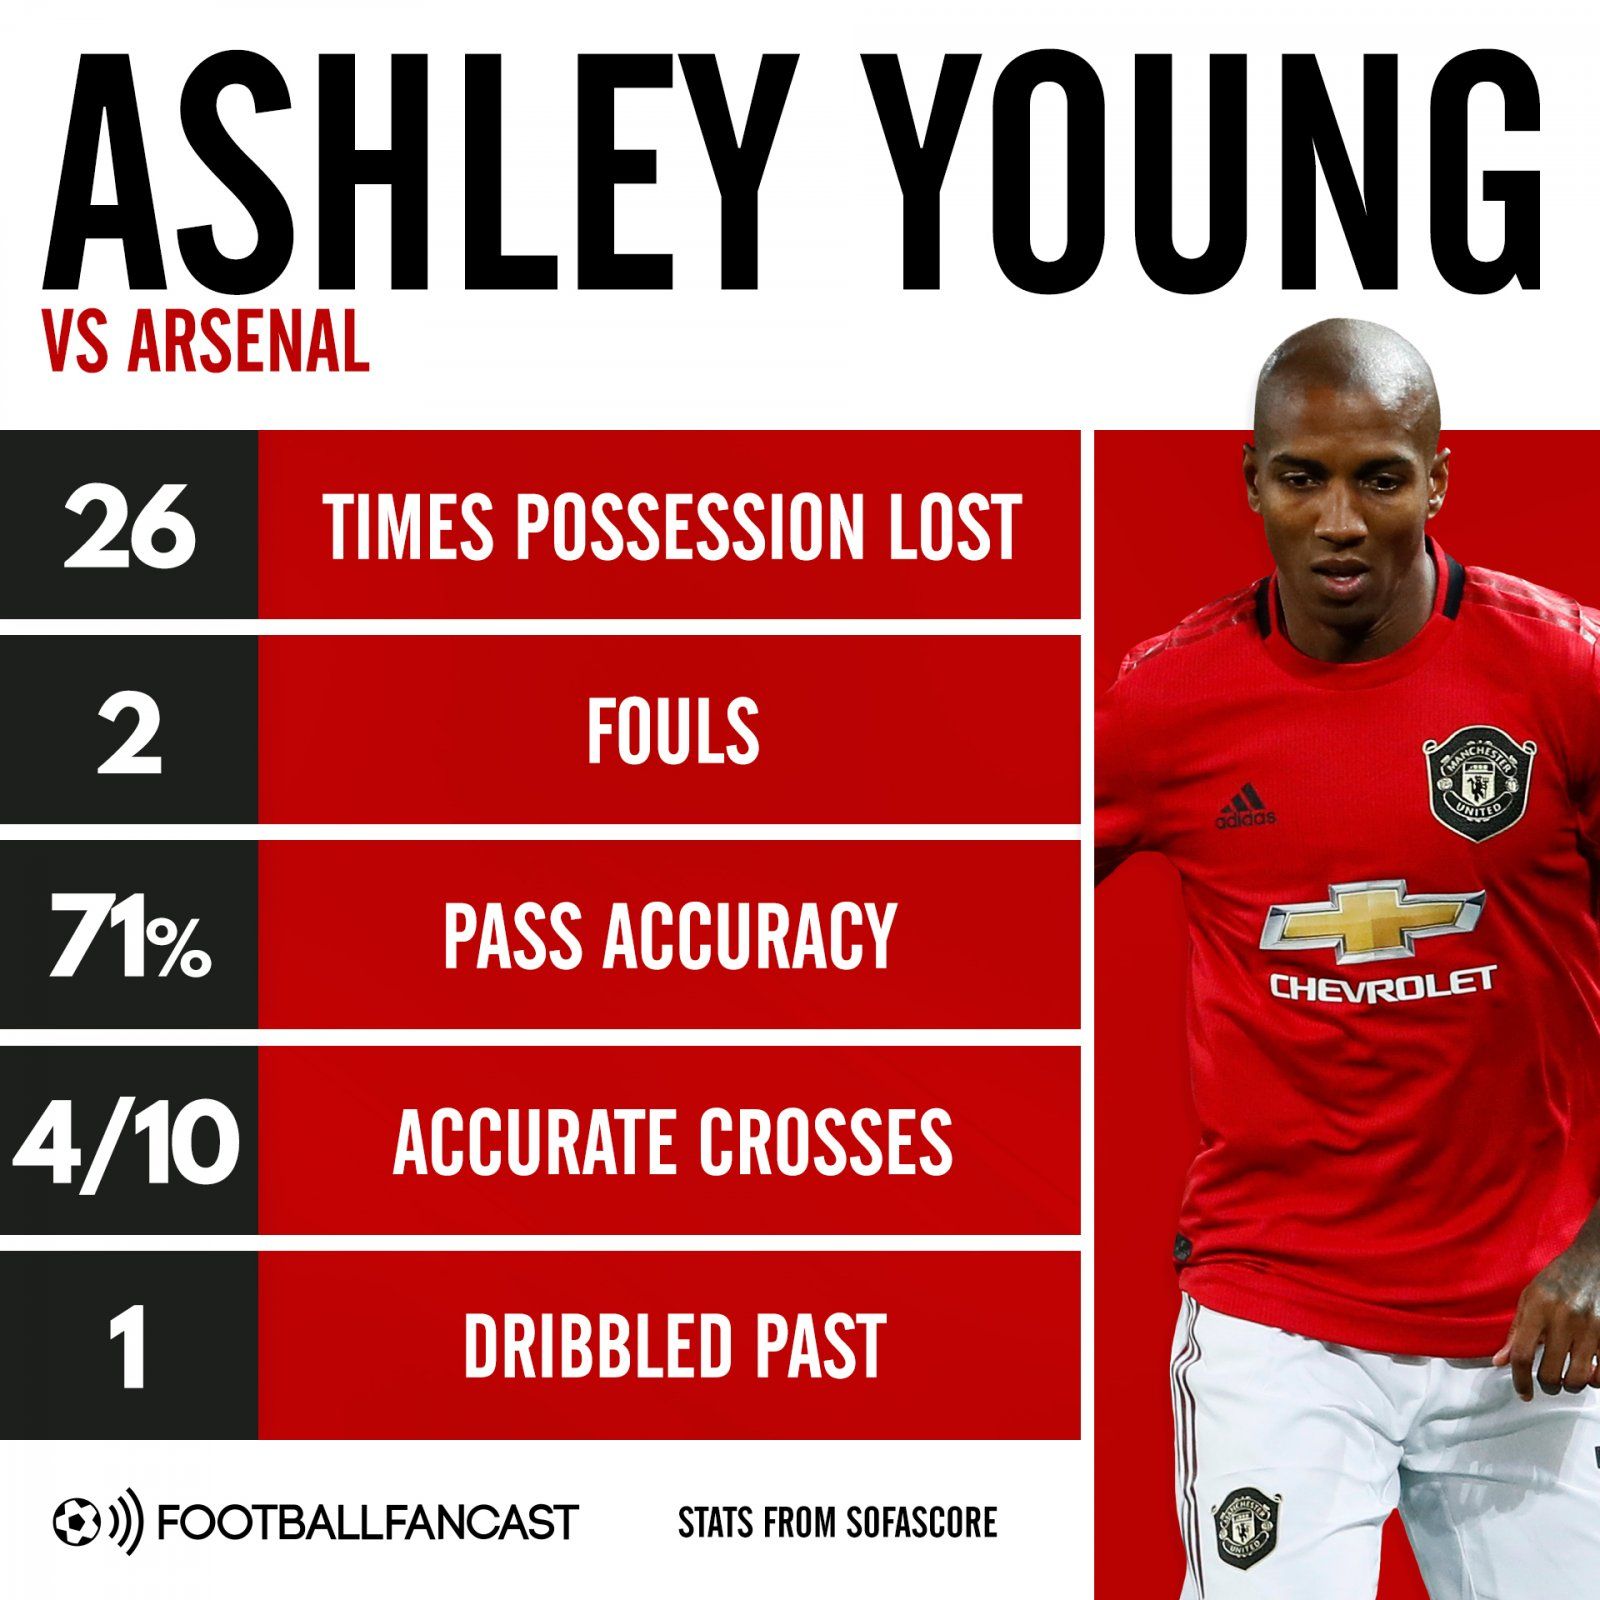 Ashley Young vs Arsenal (1)